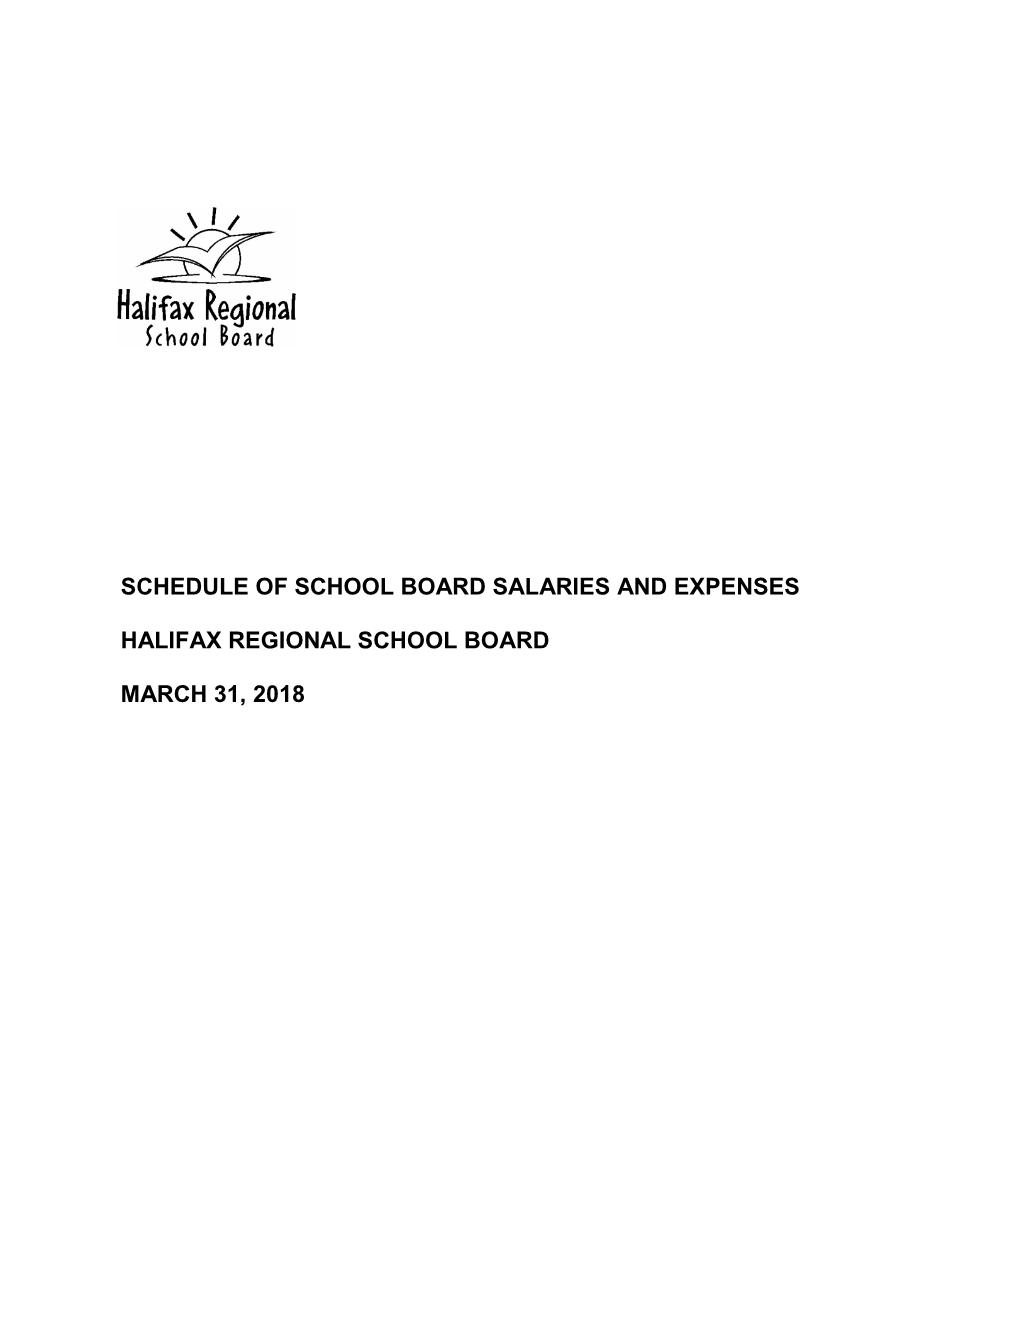 Schedule of School Board Salaries and Expenses Halifax Regional School